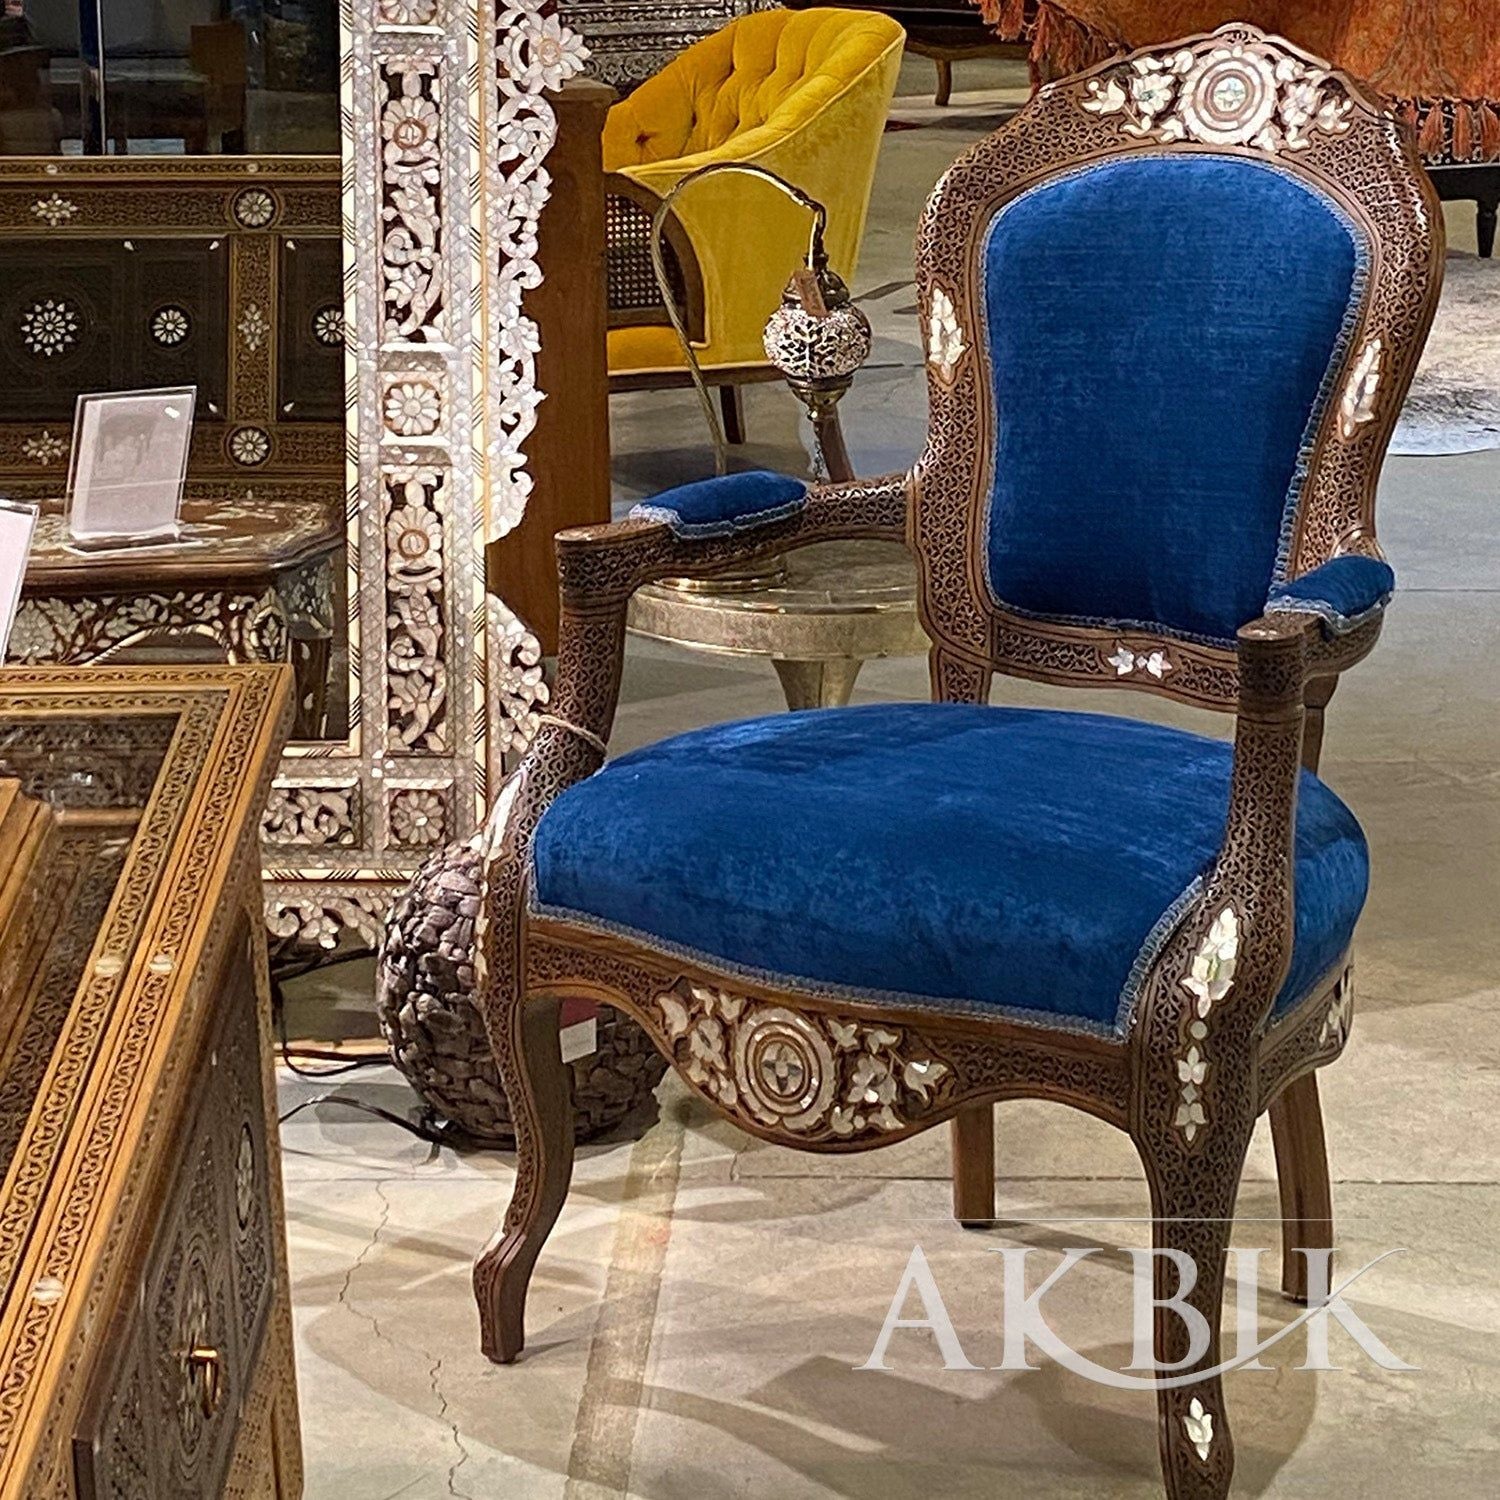 ROYAL BLUE ARMCHAIR - AKBIK Furniture & Design